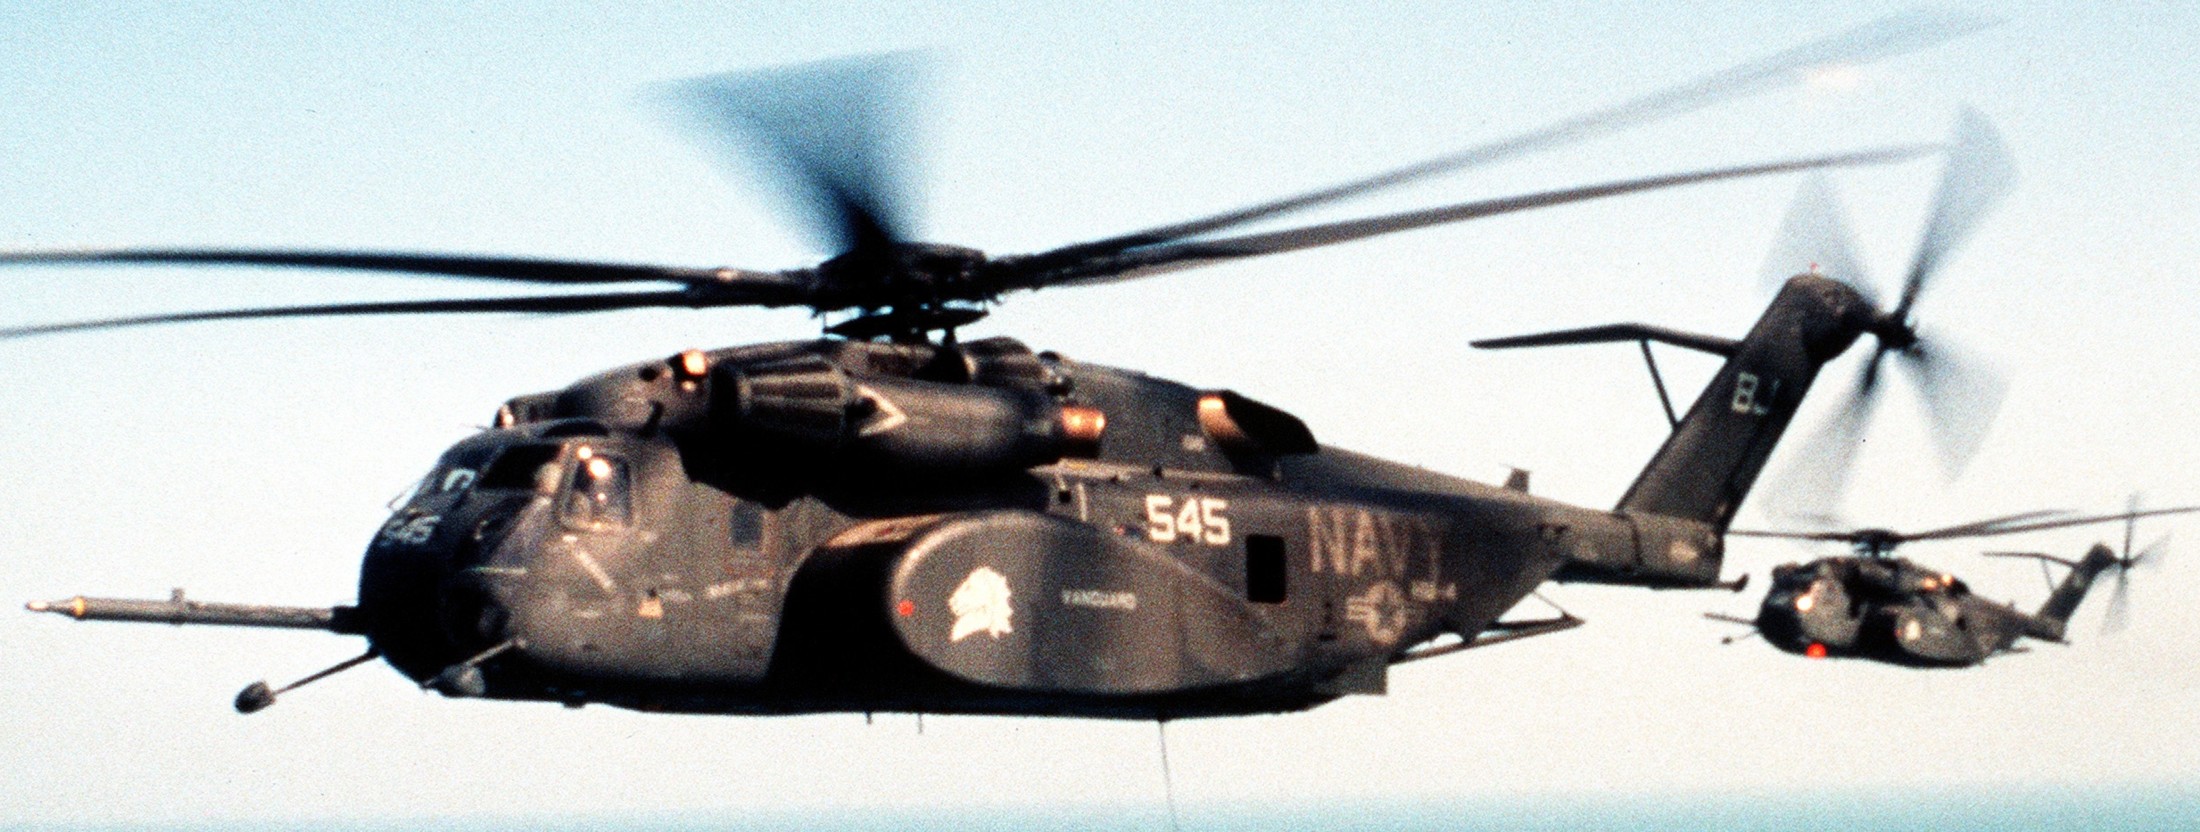 hm-14 vanguard helicopter mine countermeasures squadron navy mh-53e sea dragon 170